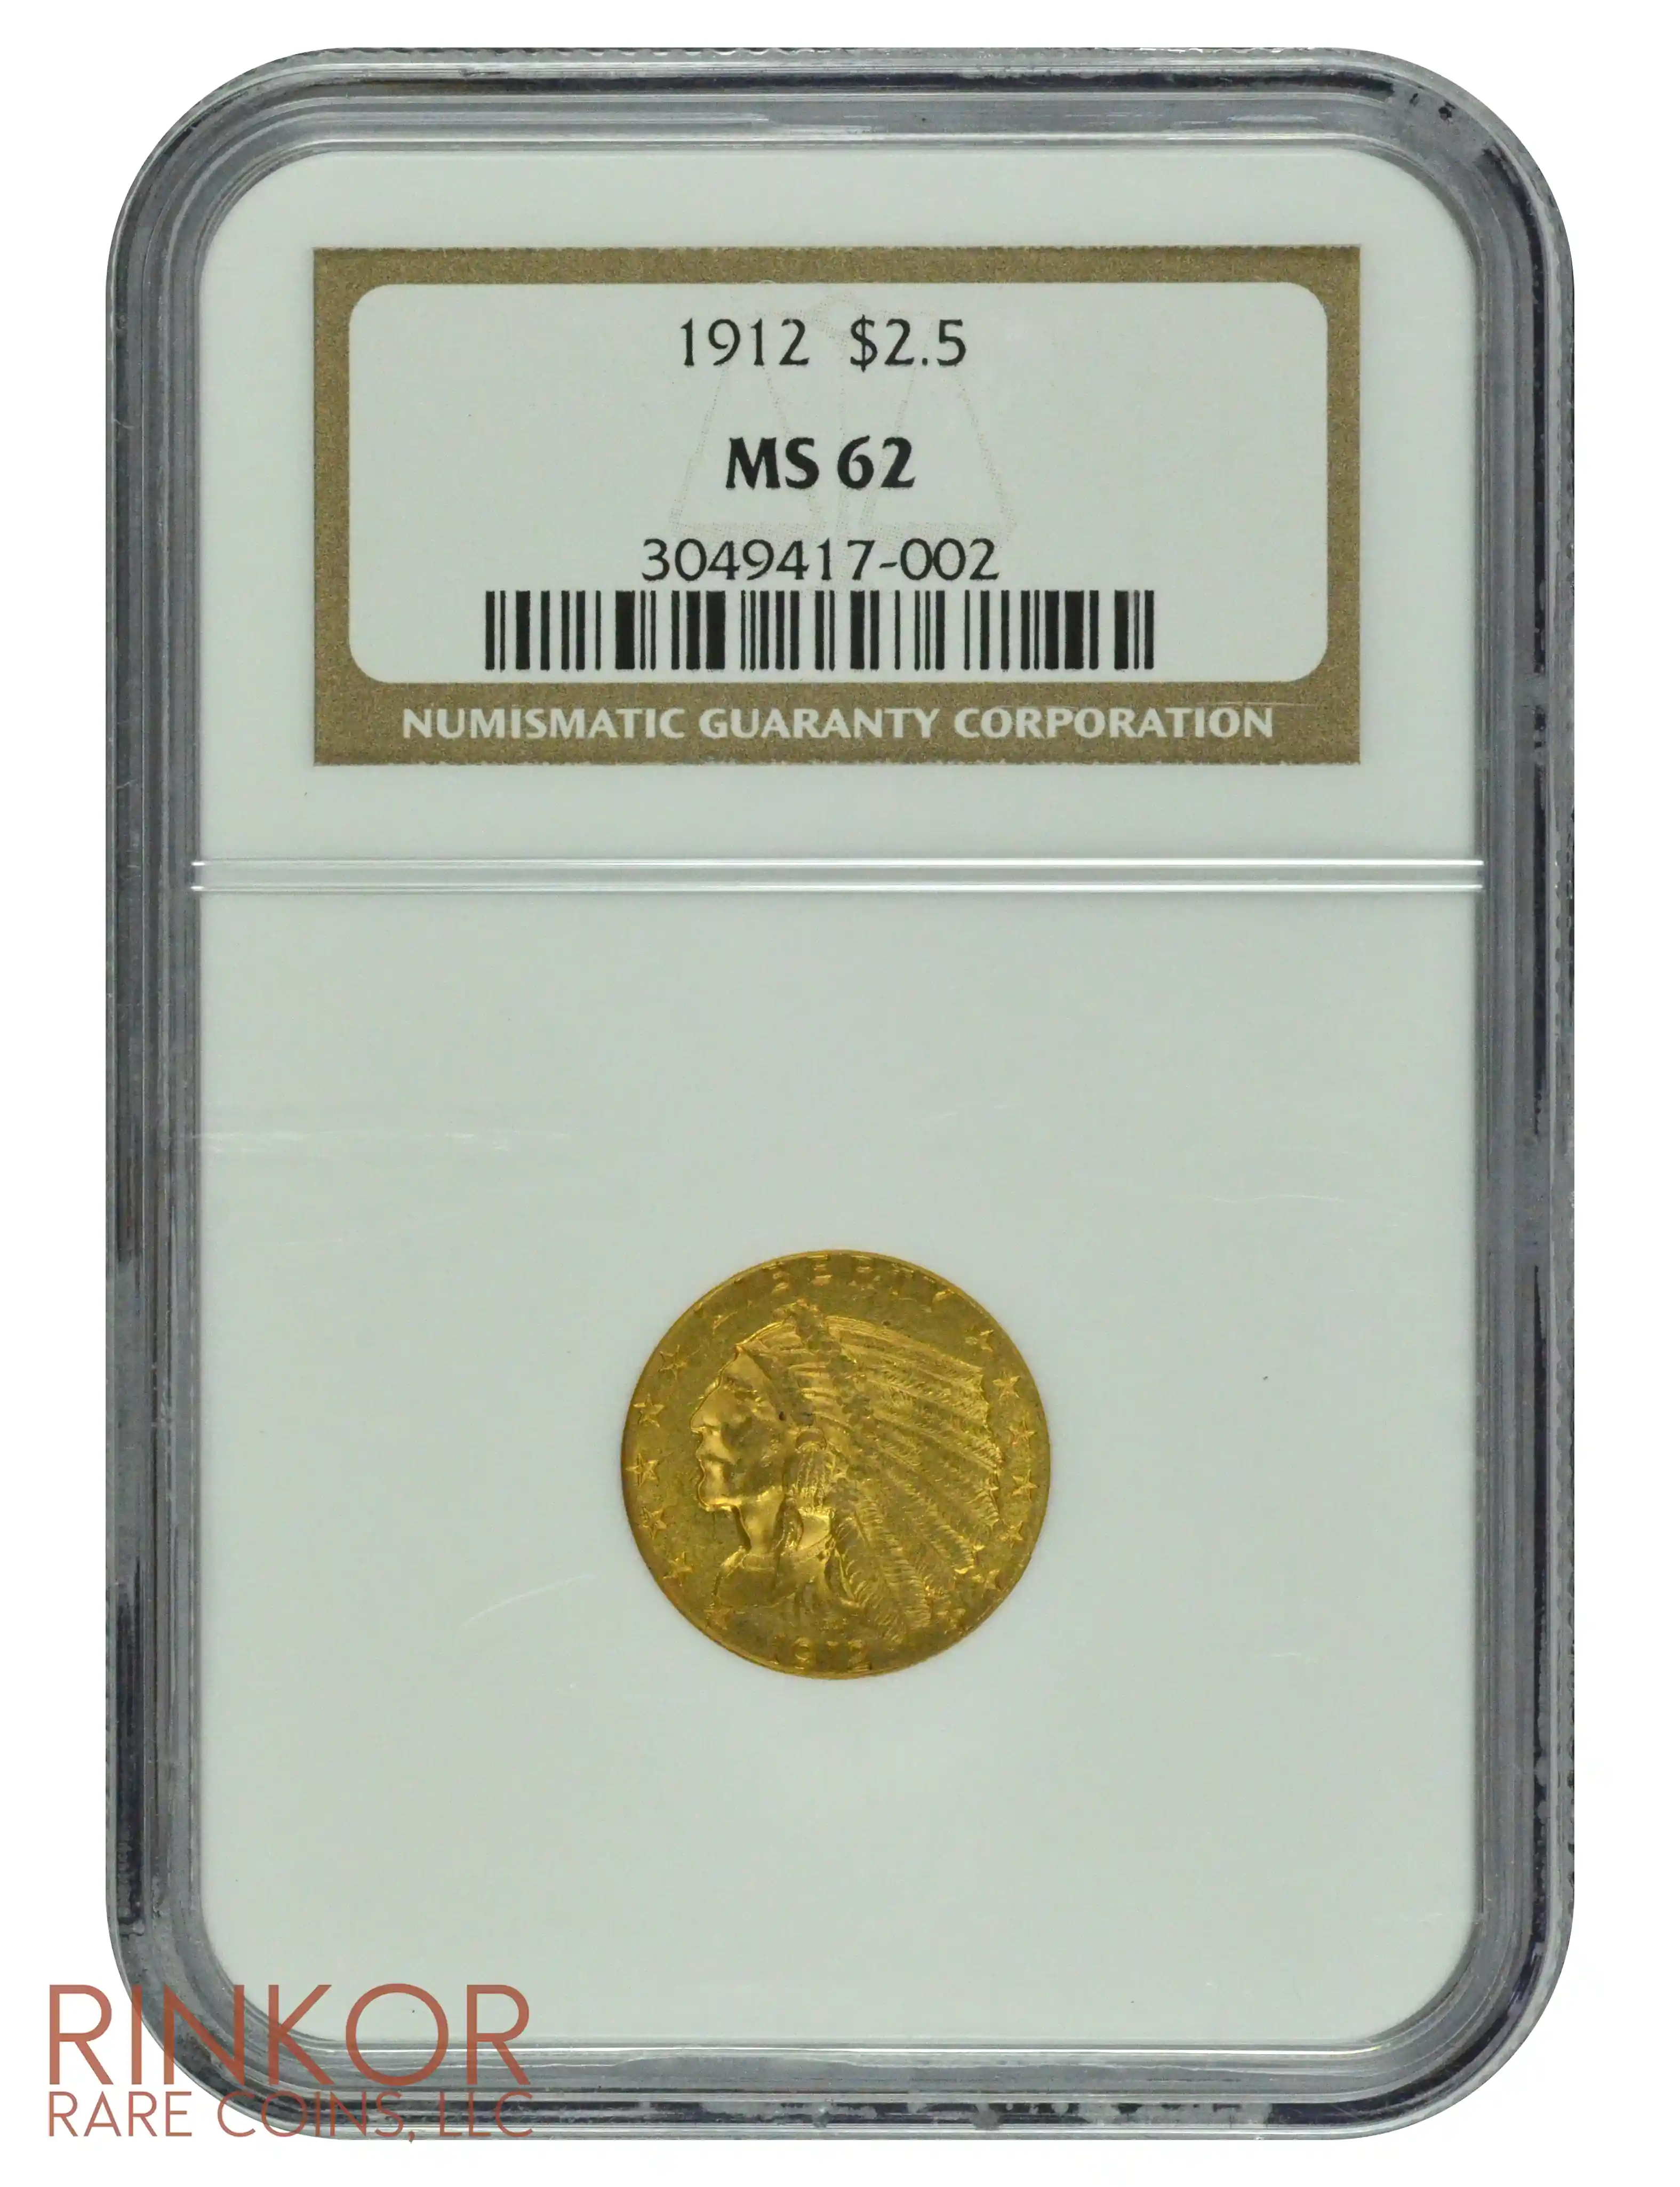 1912 $2.50 Indian Head NGC MS 62 